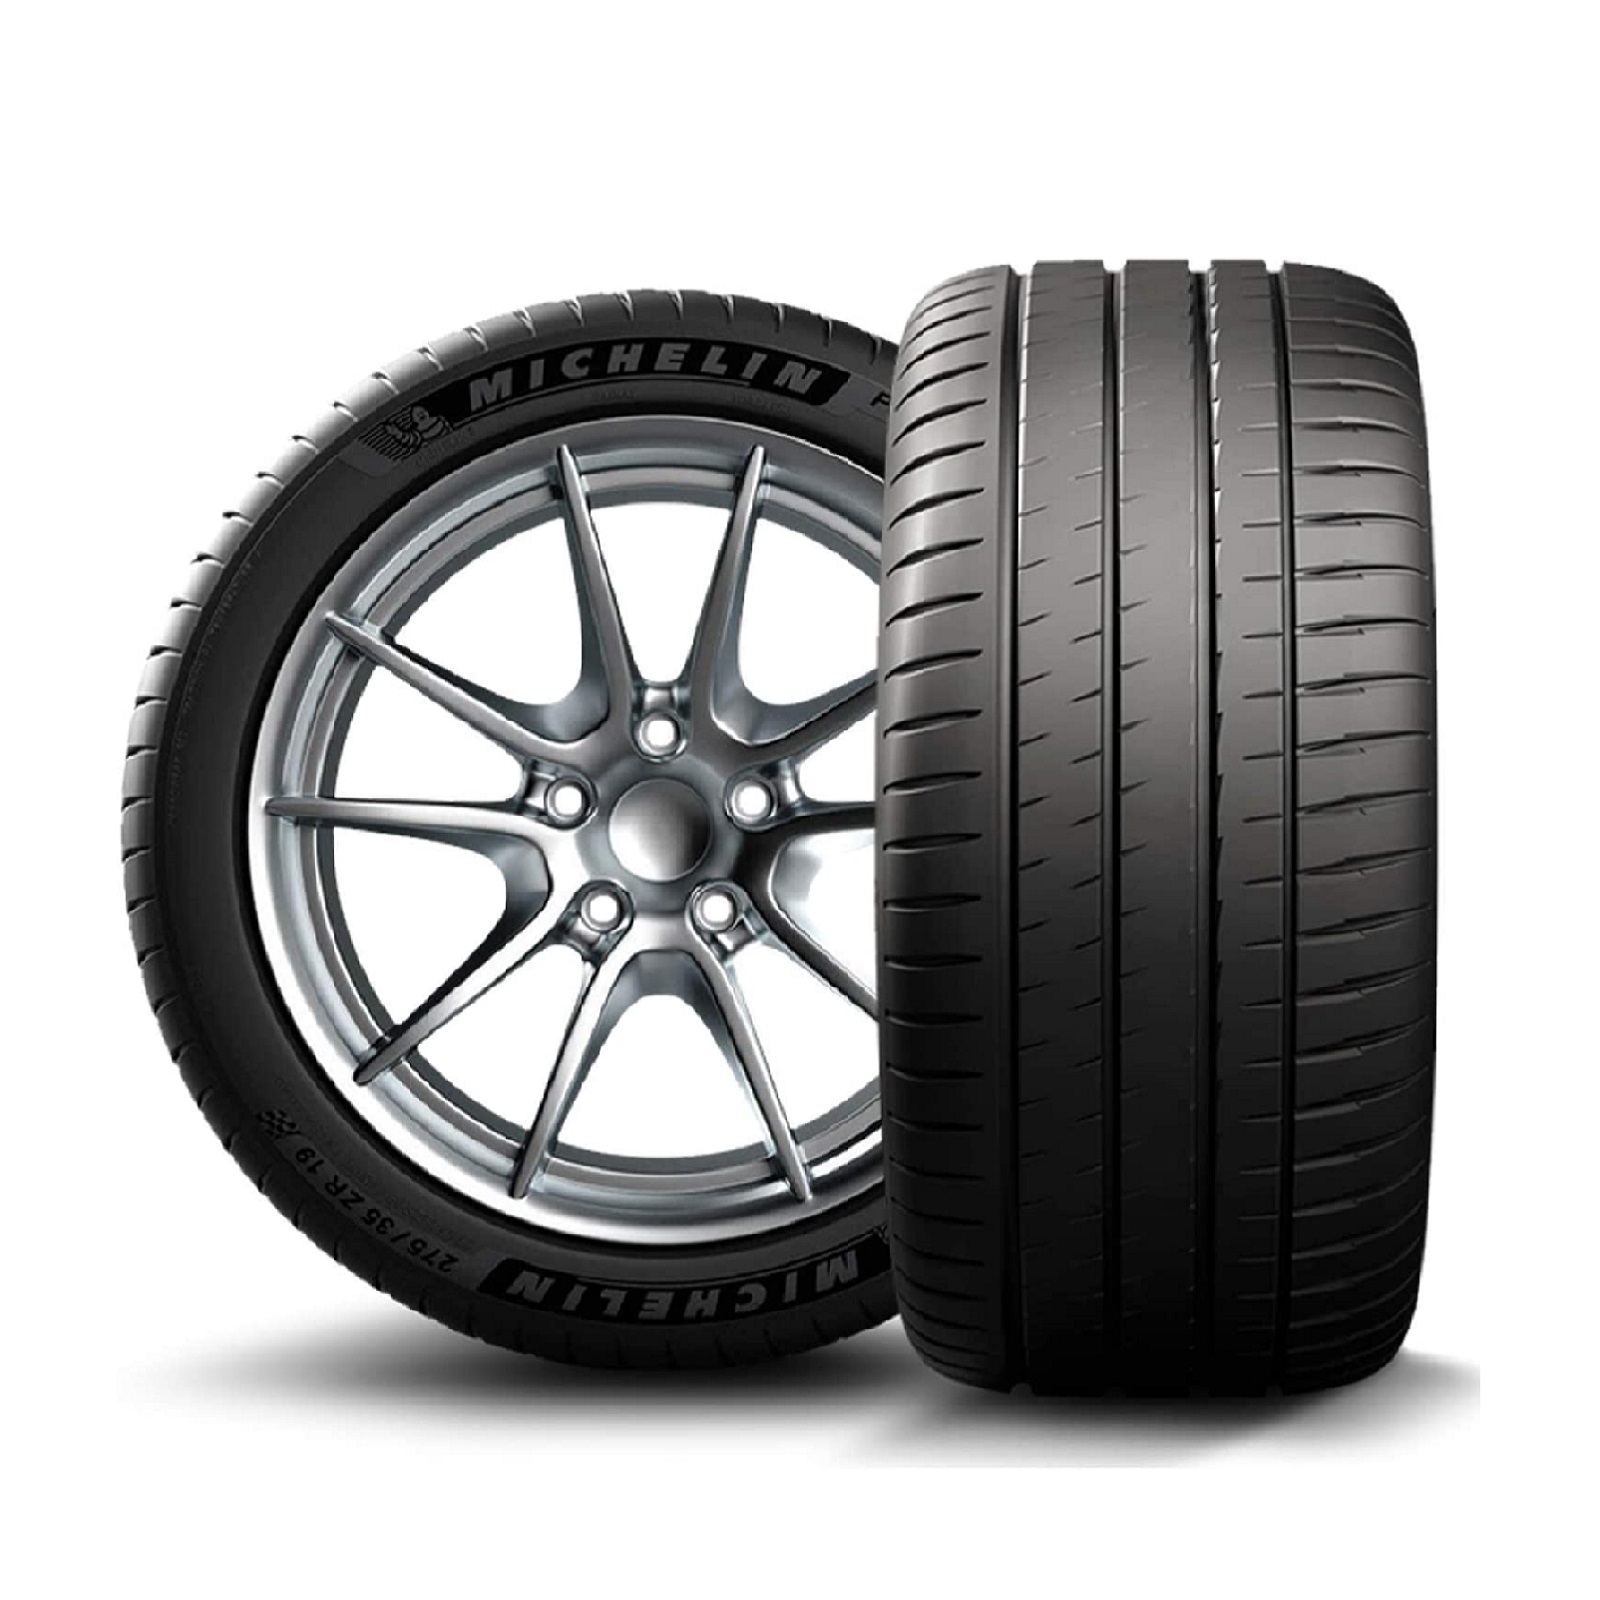 Мишлен шины страна. Michelin Pilot Sport 4. Michelin Pilot Sport 4s. Мишлен Pilot Sport 4s. Michelin 225/40zr18 Pilot Sport 5.